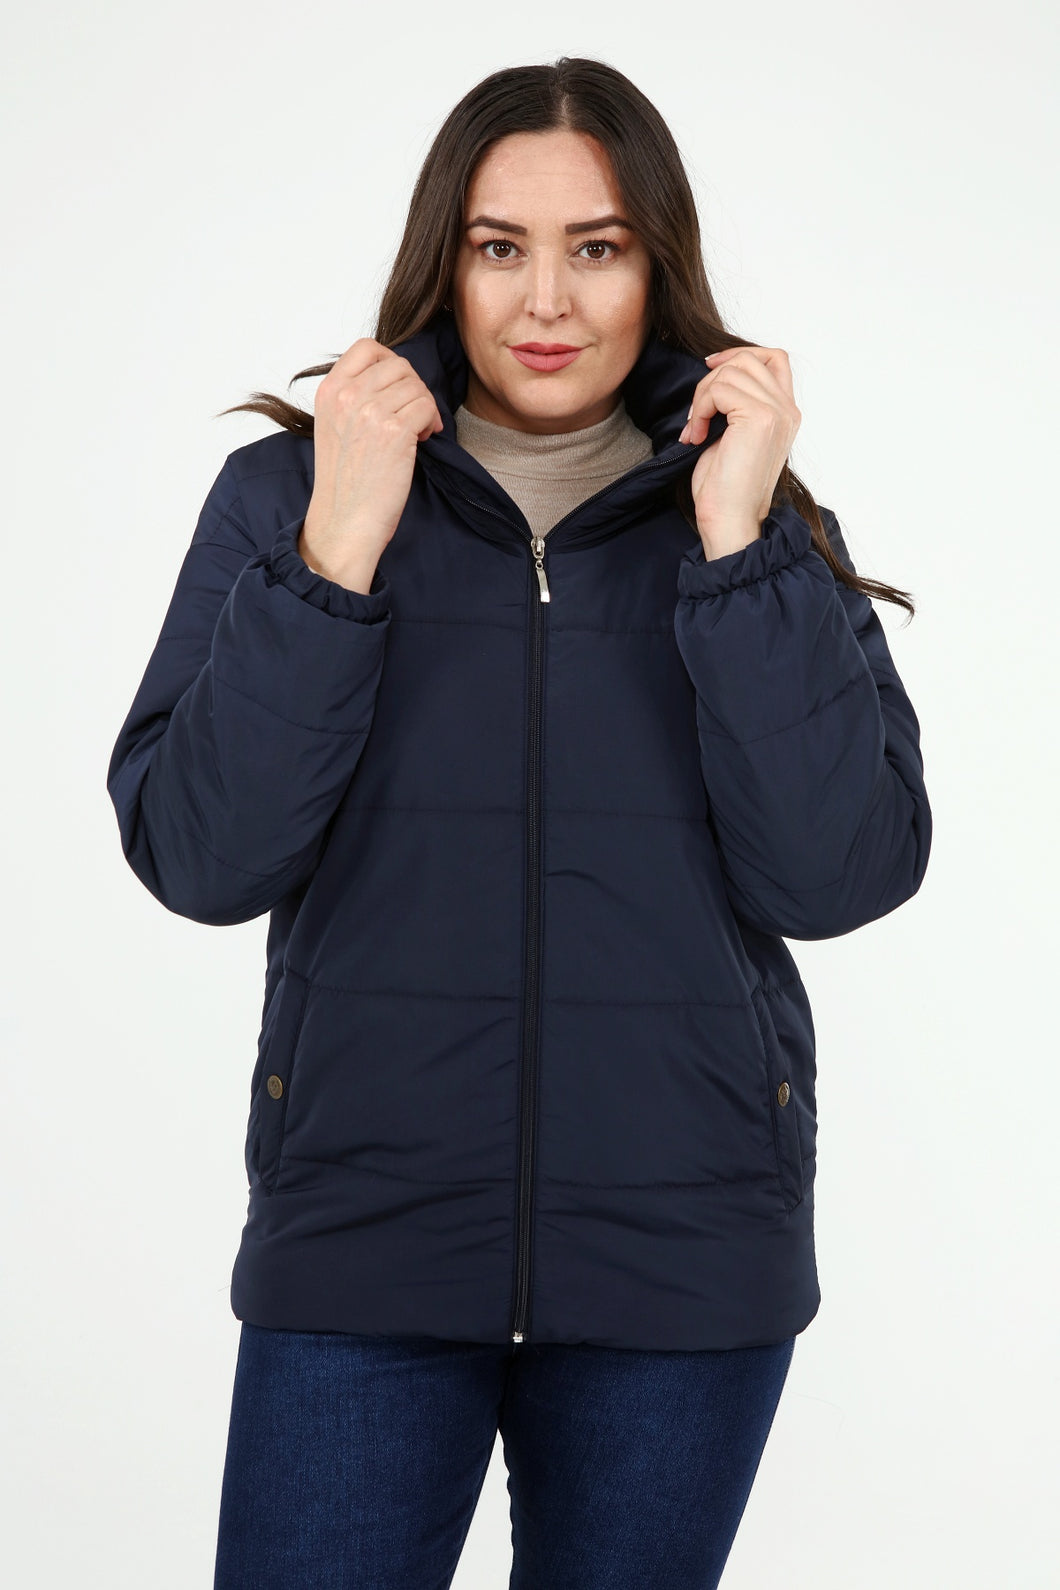 Women's Oversize Zipped Pocket Navy Blue Coat